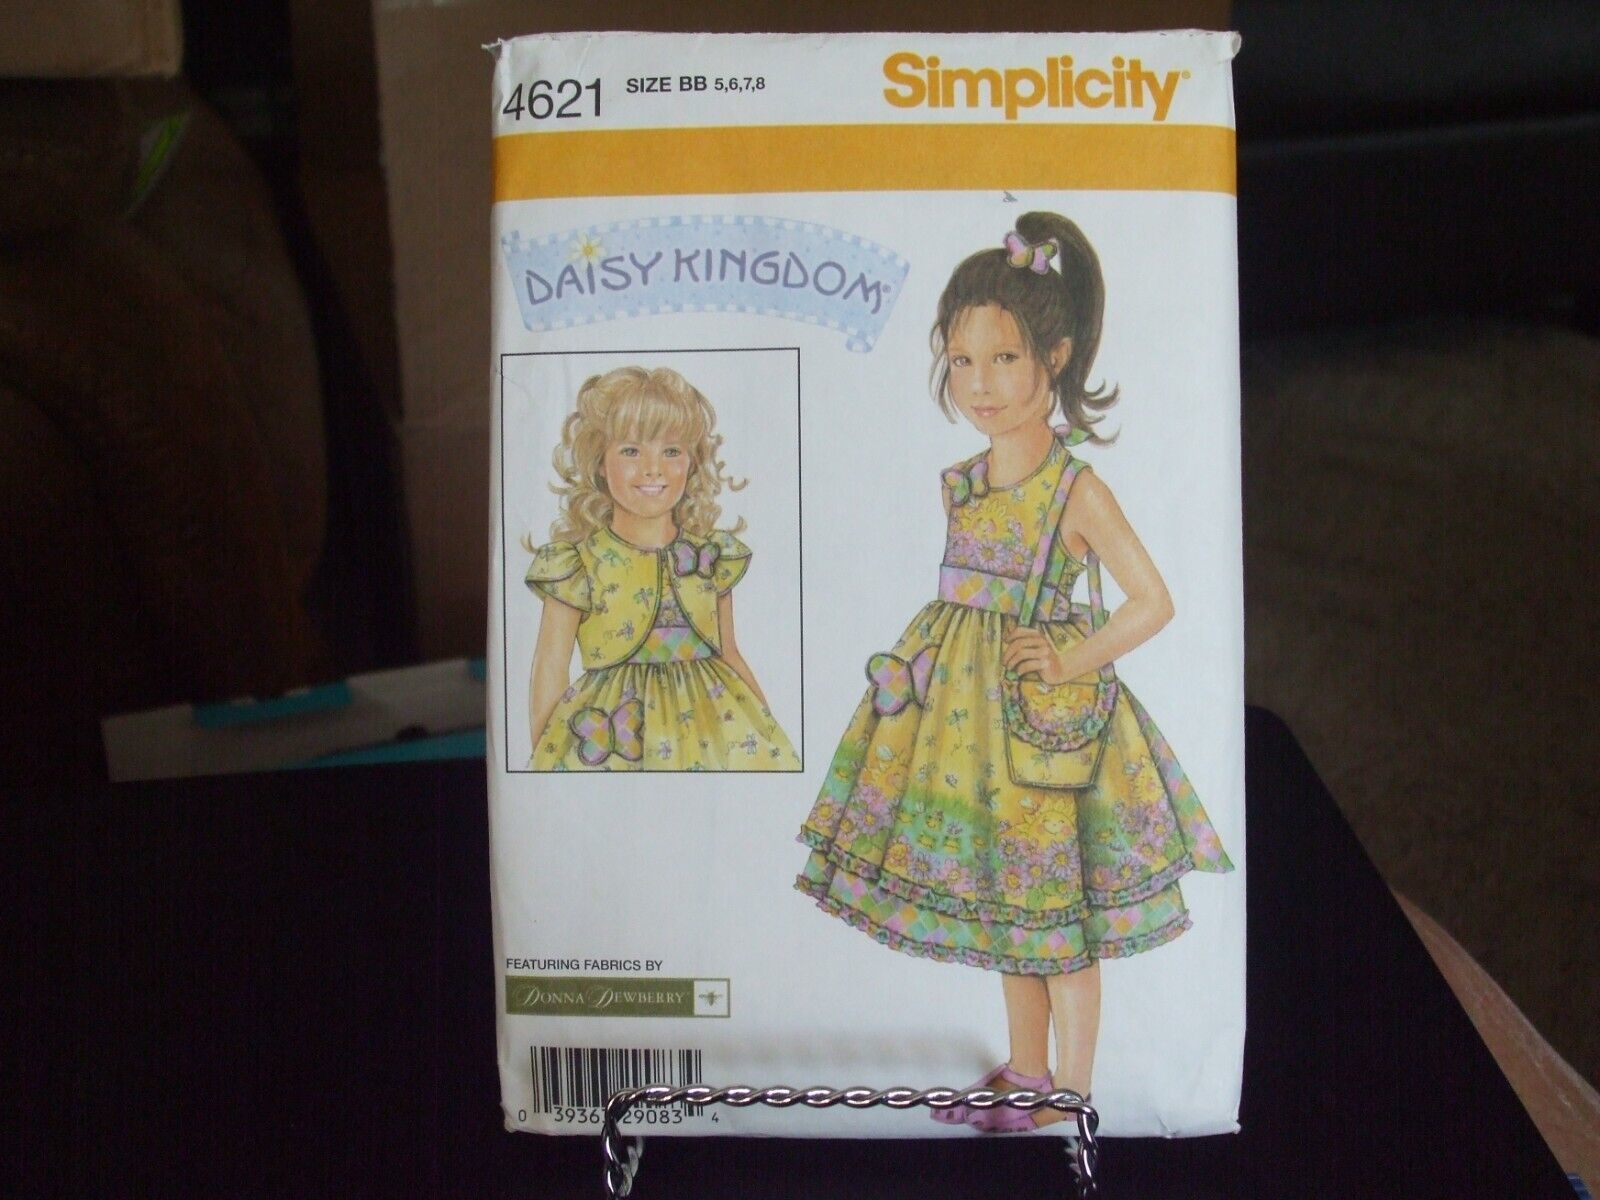 Primary image for Simplicity Daisy Kingdom 4621 Girls Dress, Jacket & Purse Pattern - Size 5/6/7/8